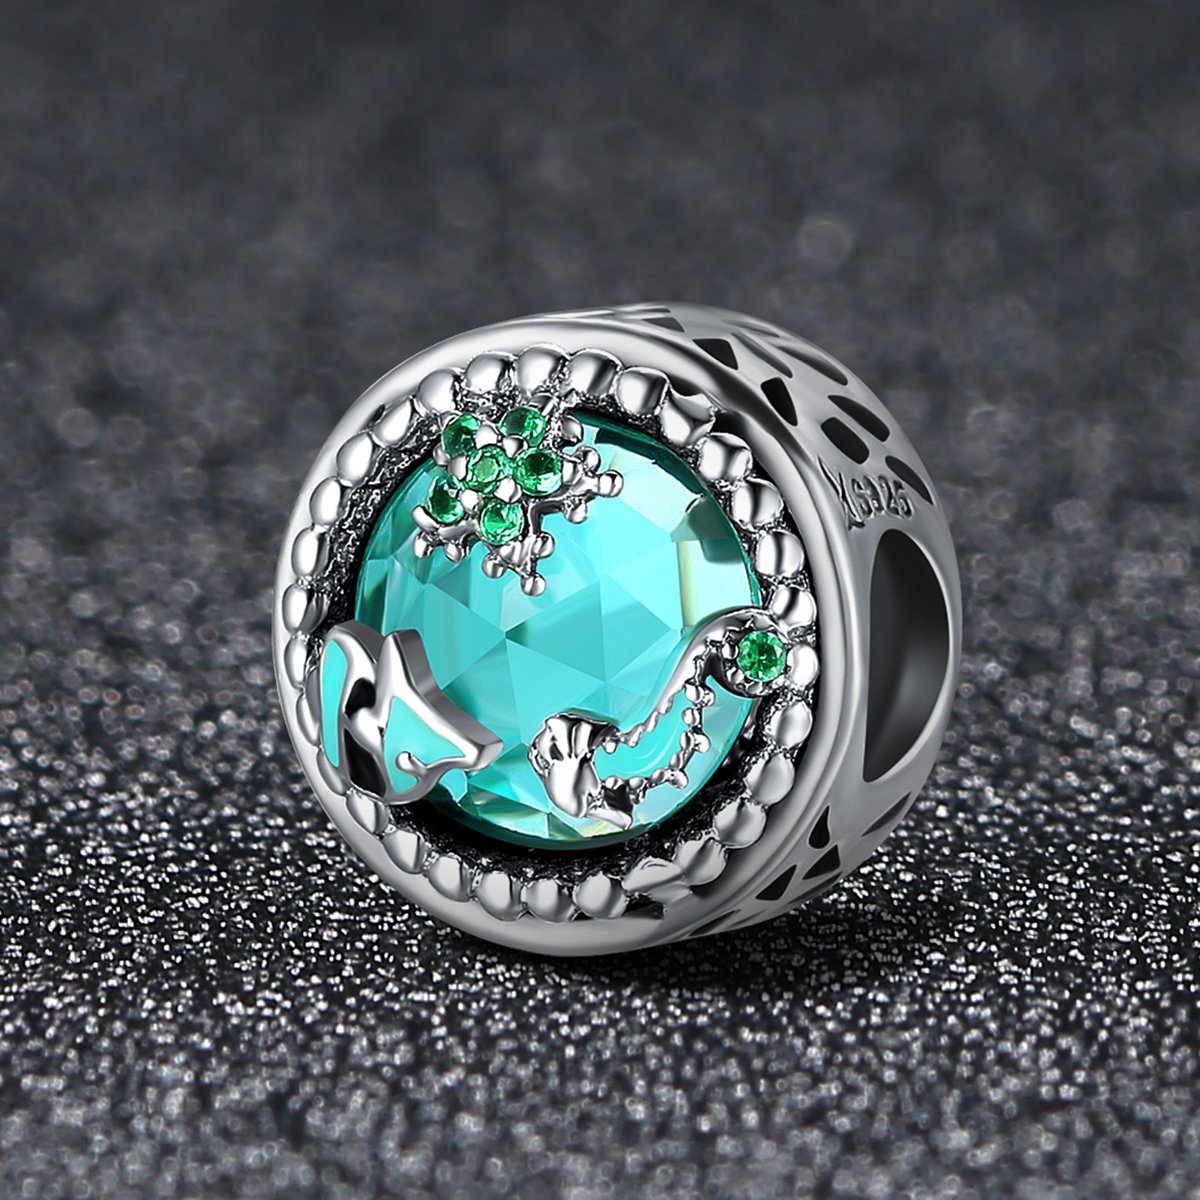 Sterling 925 silver charm the green echo bead pendant fits Pandora charm and European charm bracelet Xaxe.com